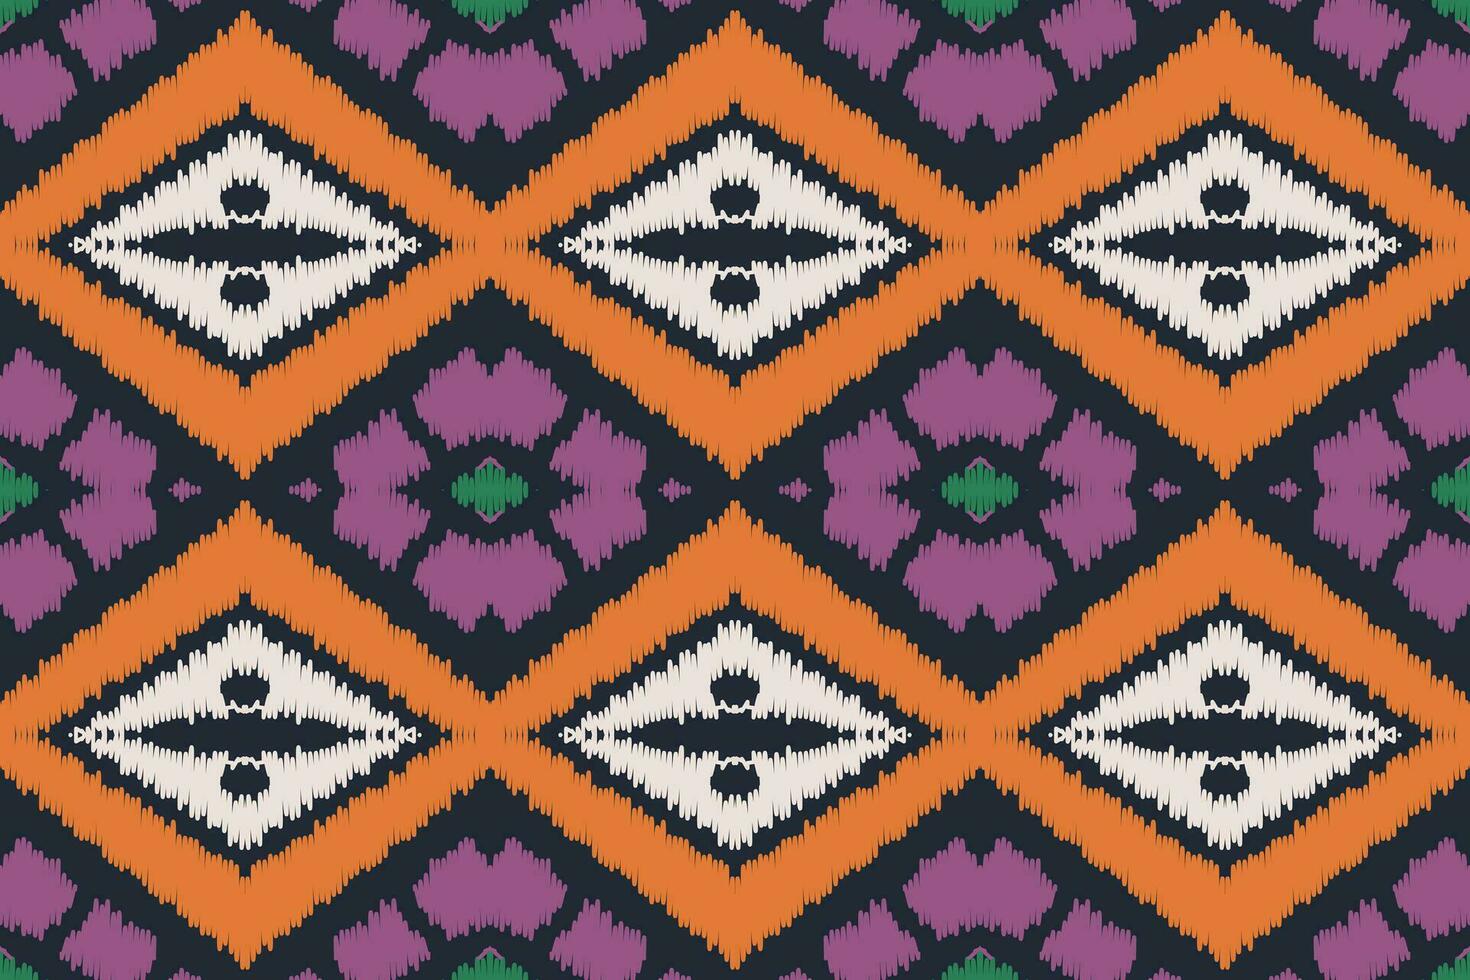 ikat cachemir modelo bordado antecedentes. ikat diseños geométrico étnico oriental modelo tradicional. ikat azteca estilo resumen diseño para impresión textura,tela,sari,sari,alfombra. vector